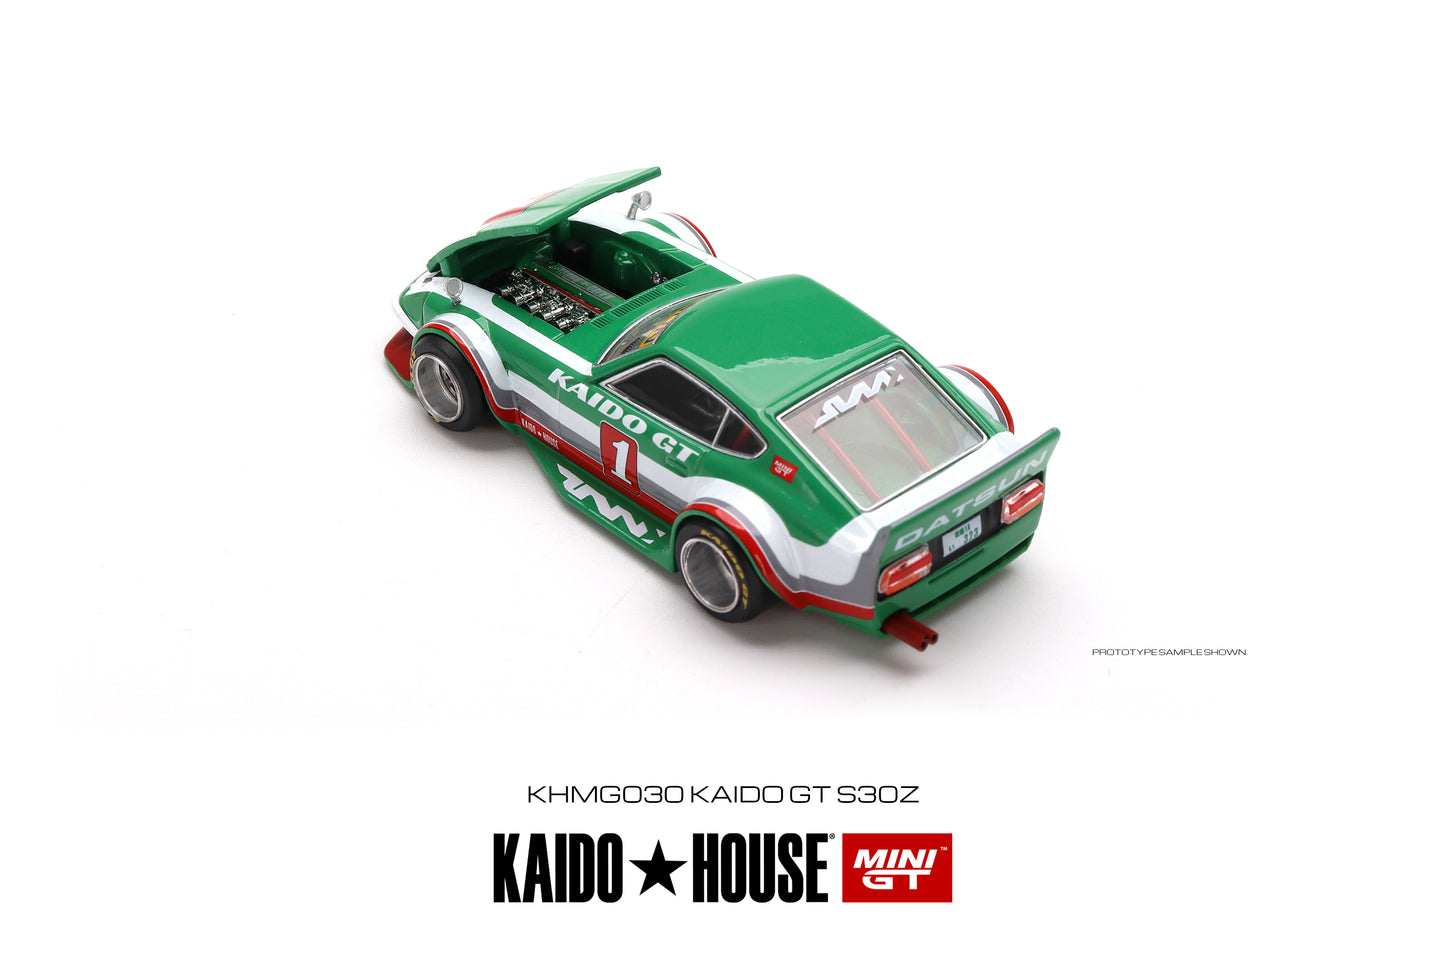 Mini GT Kaido House 030 Datsun Fairlady Z V2 Green White Red 1:64